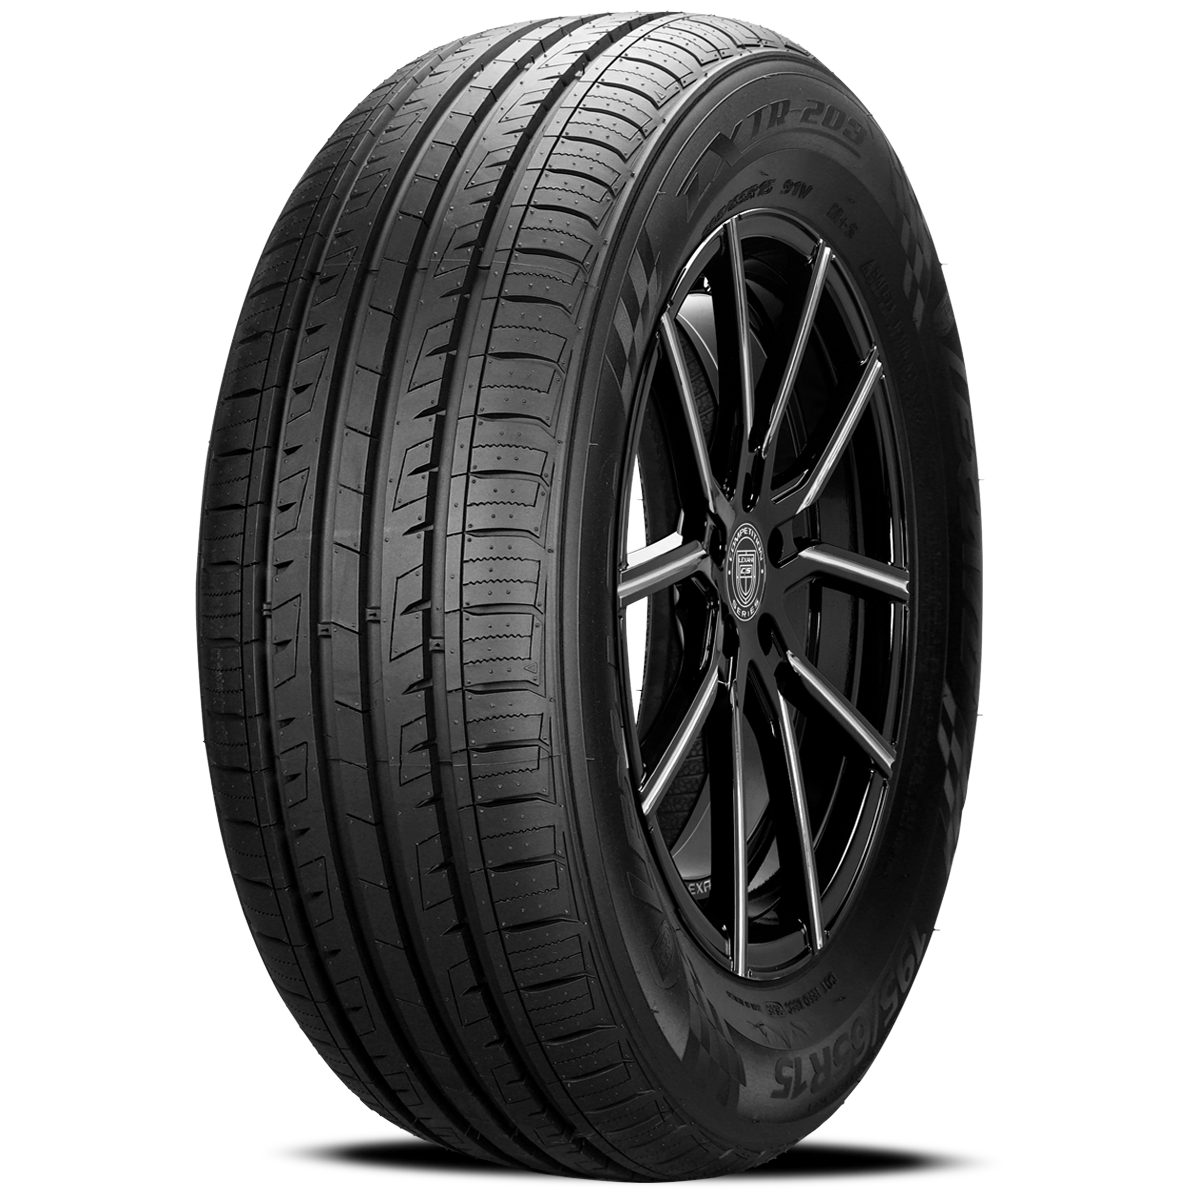 LEXANI LXTR-203 215/55R16 (25.3X8.5R 16) Tires